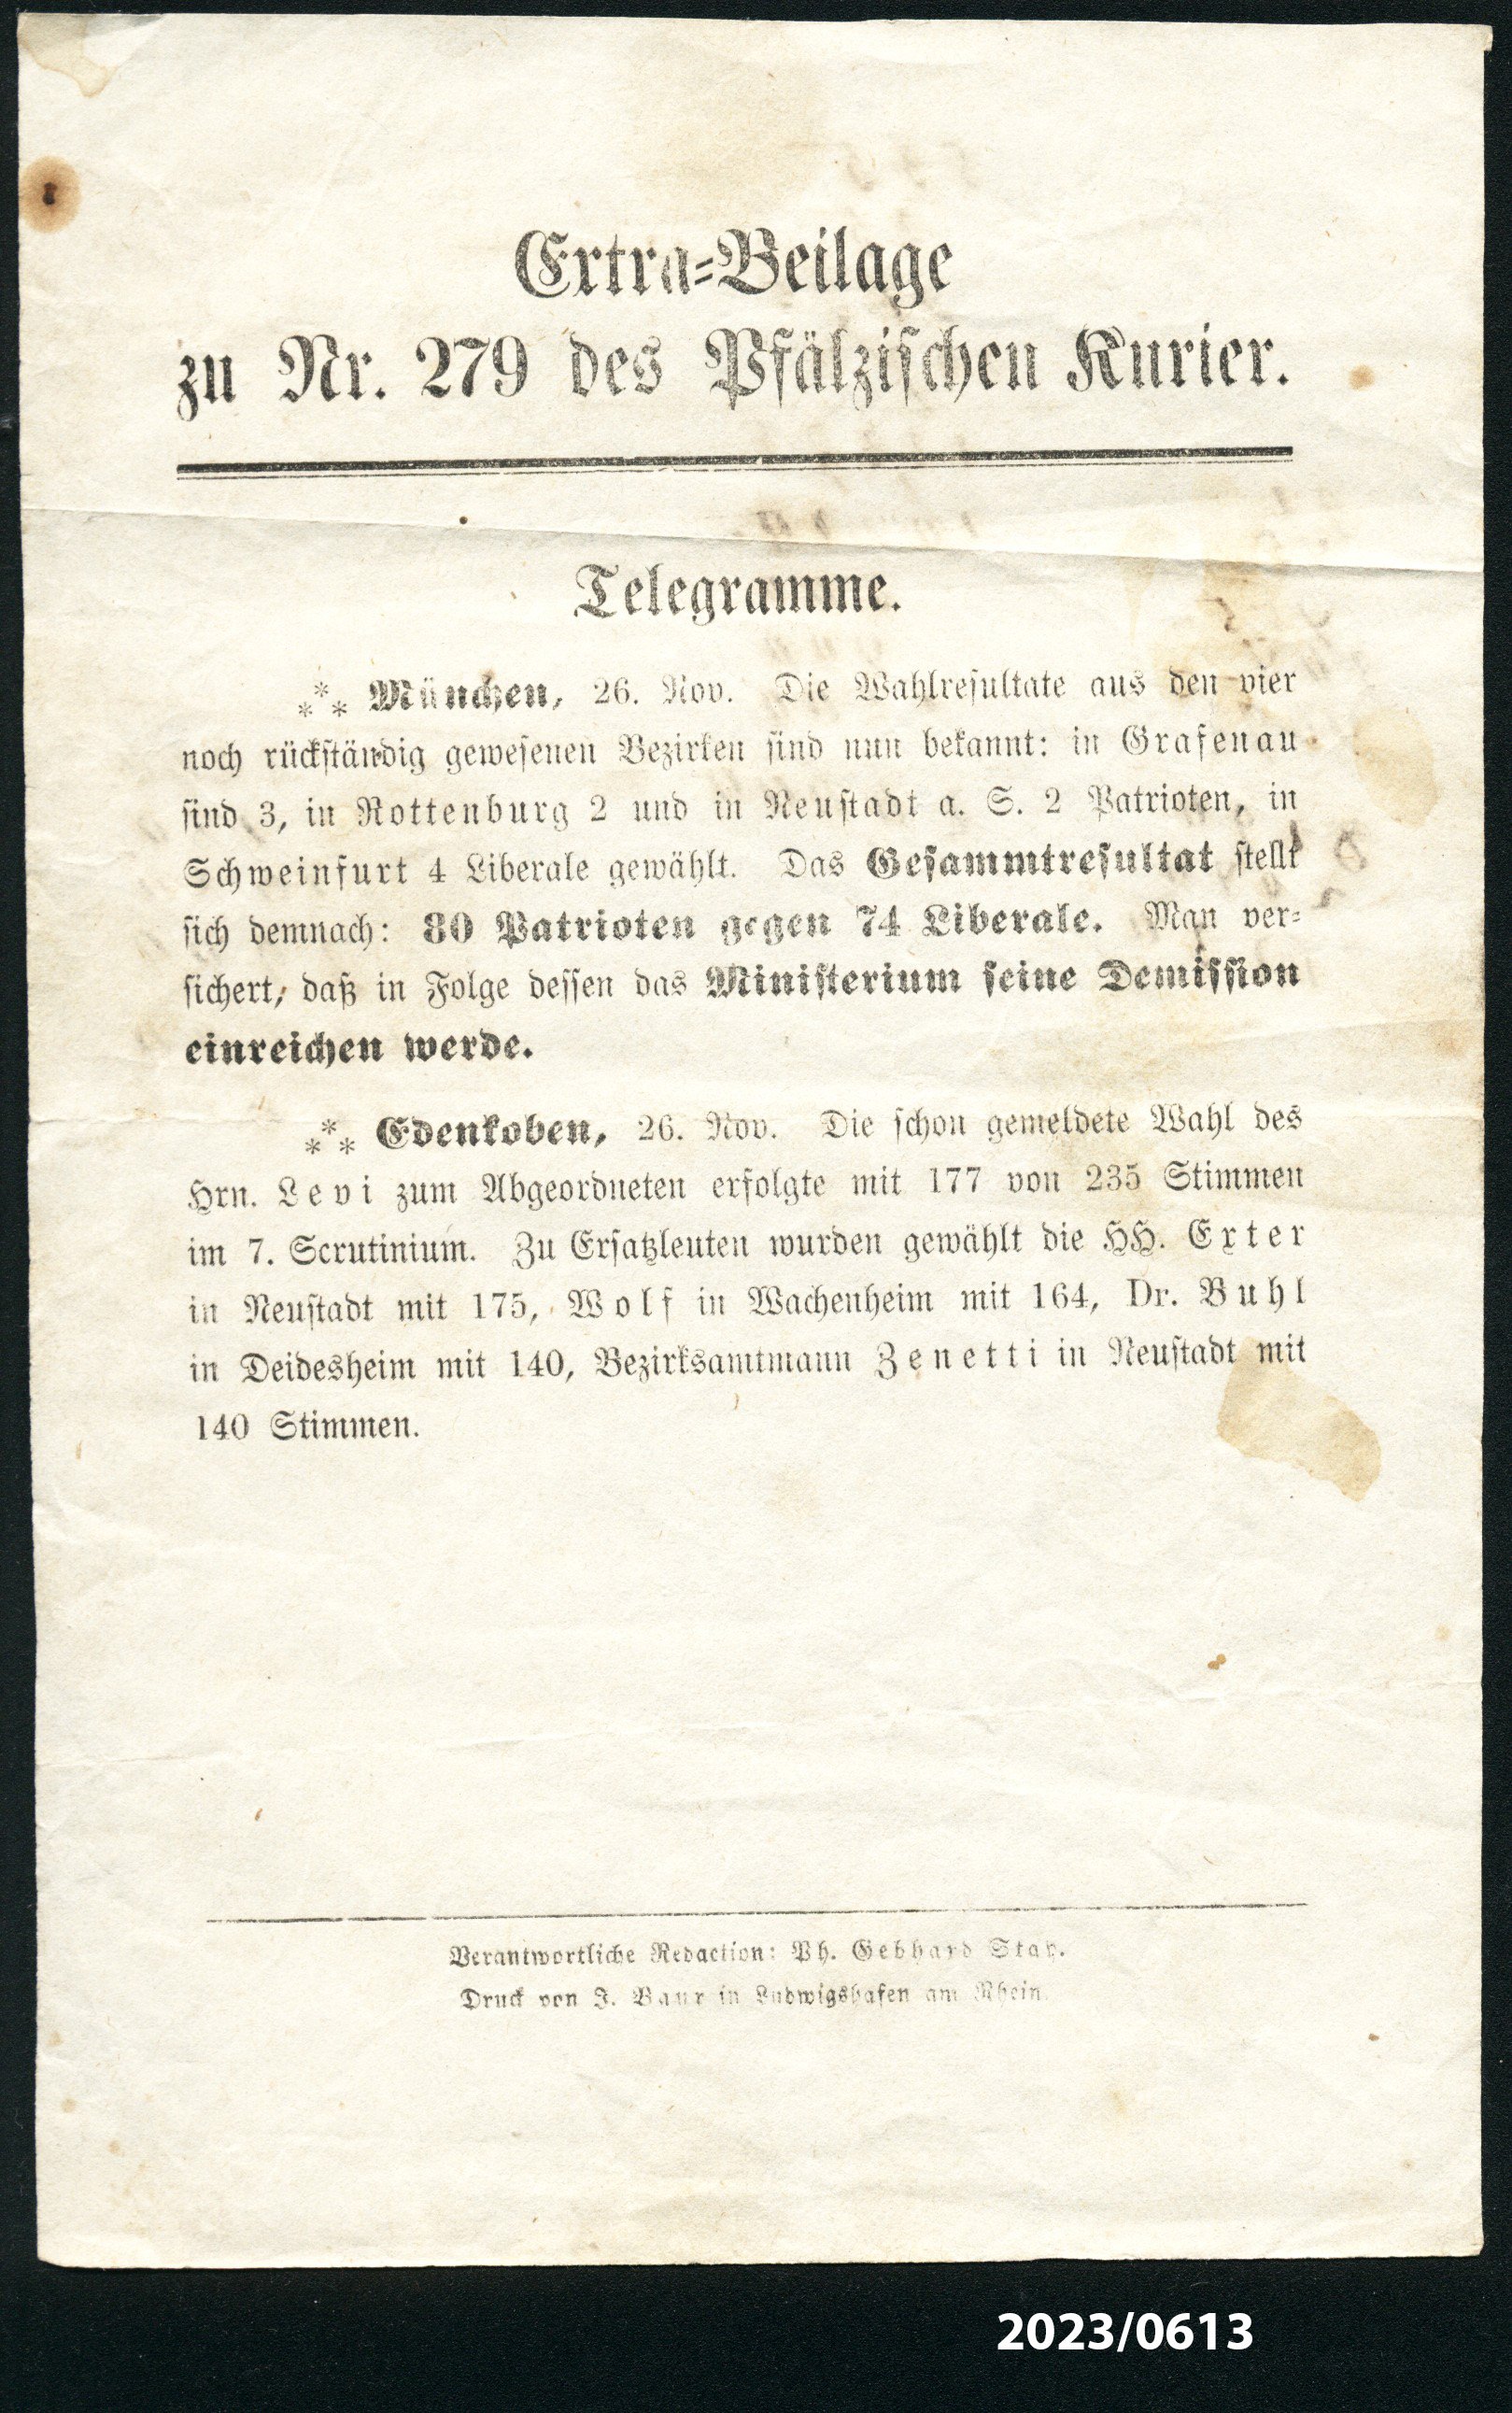 Extra-Beilage zu Nr. 279 des Pfälzischen Kurier 27.11.1870 (Stadtmuseum Bad Dürkheim im Kulturzentrum Haus Catoir CC BY-NC-SA)